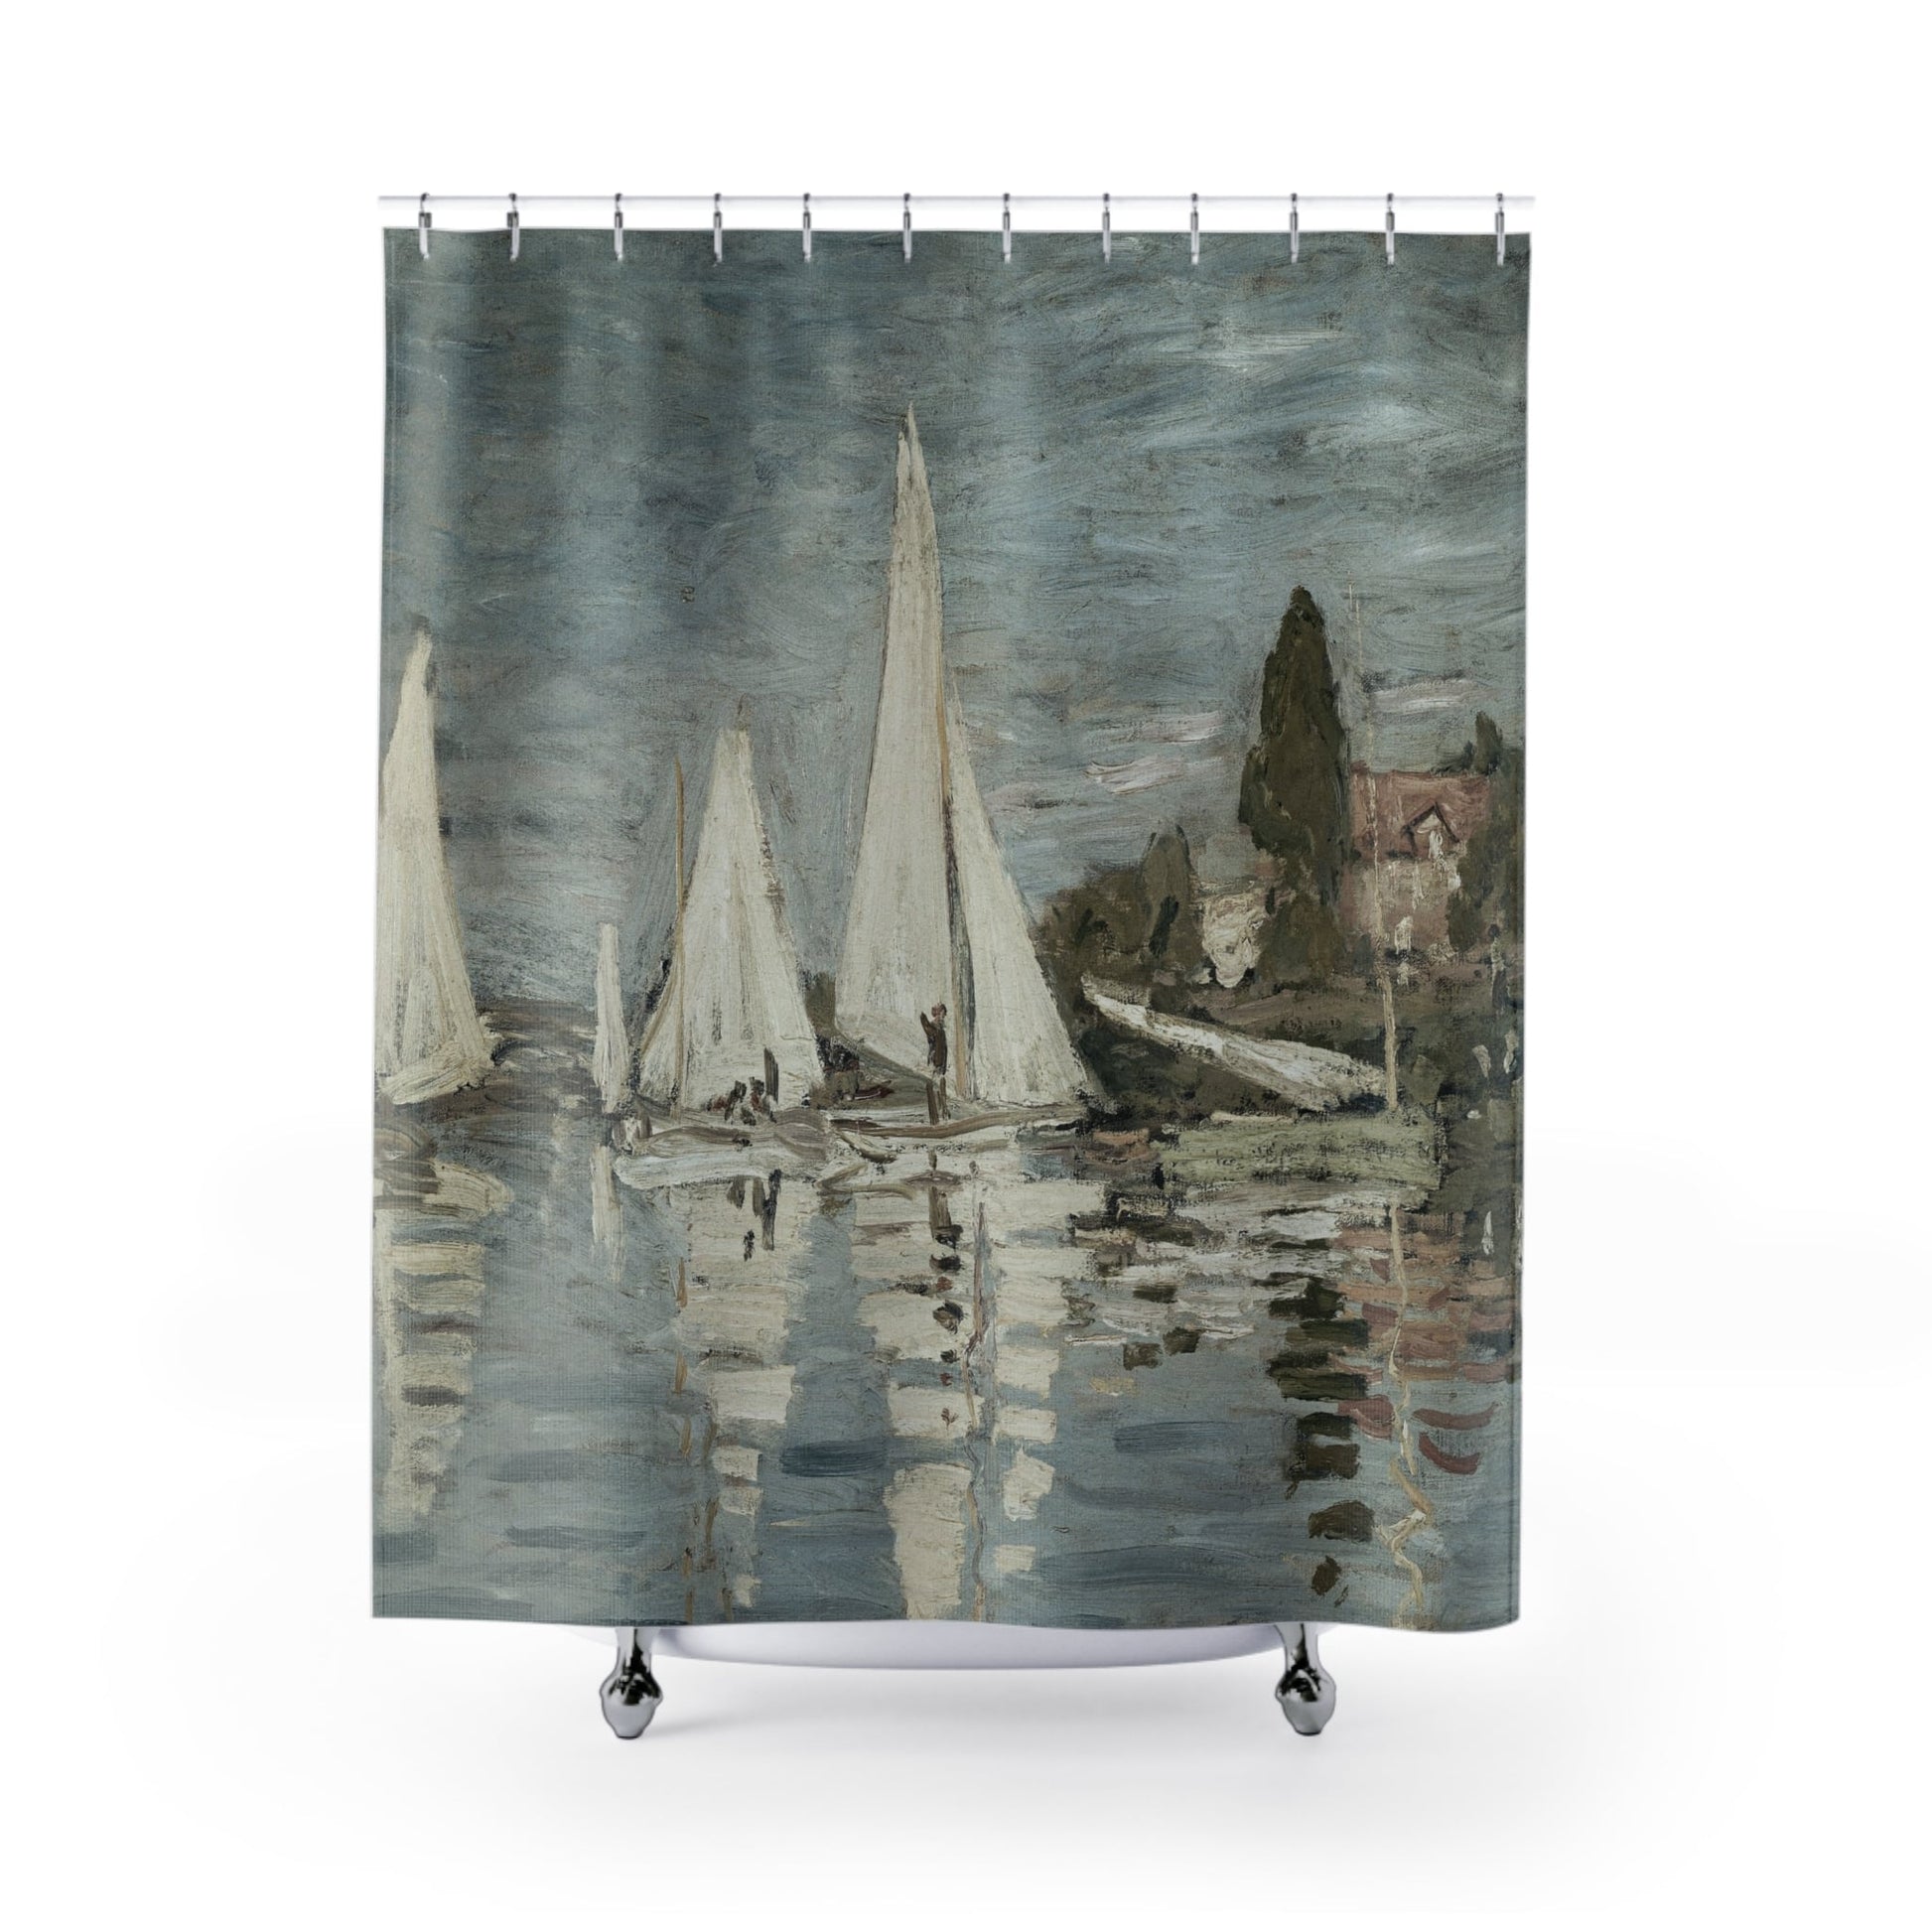 Nautical Shower Curtain with sail boats design, coastal bathroom decor featuring a nautical theme.